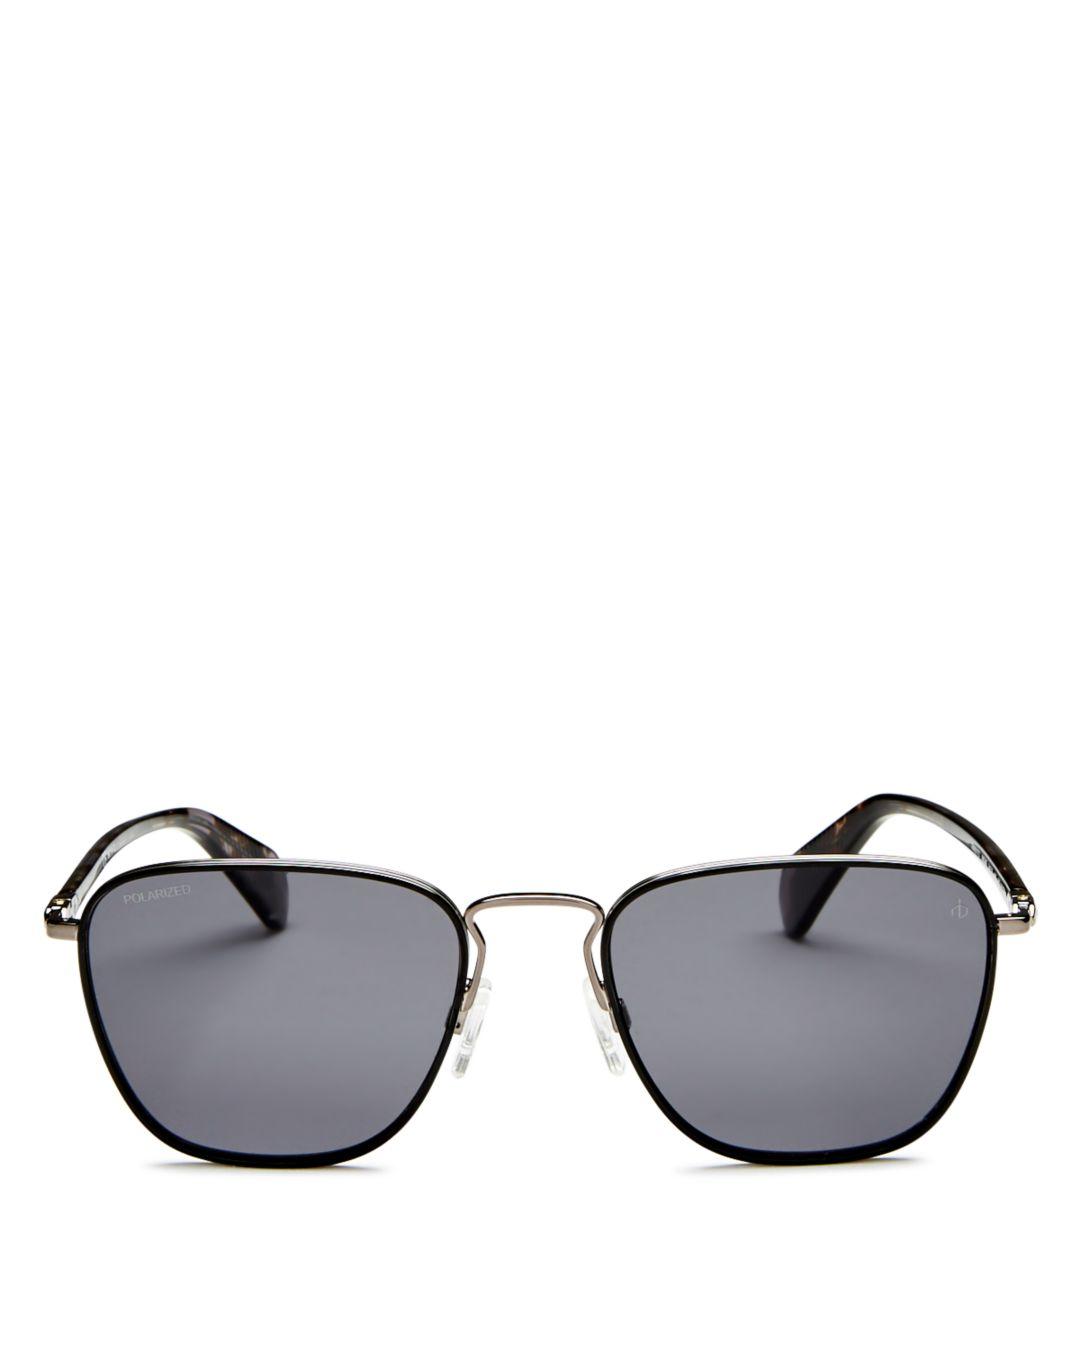 Rag & Bone 54mm Polarized Navigator Sunglasses in Gray/Black (Metallic ...